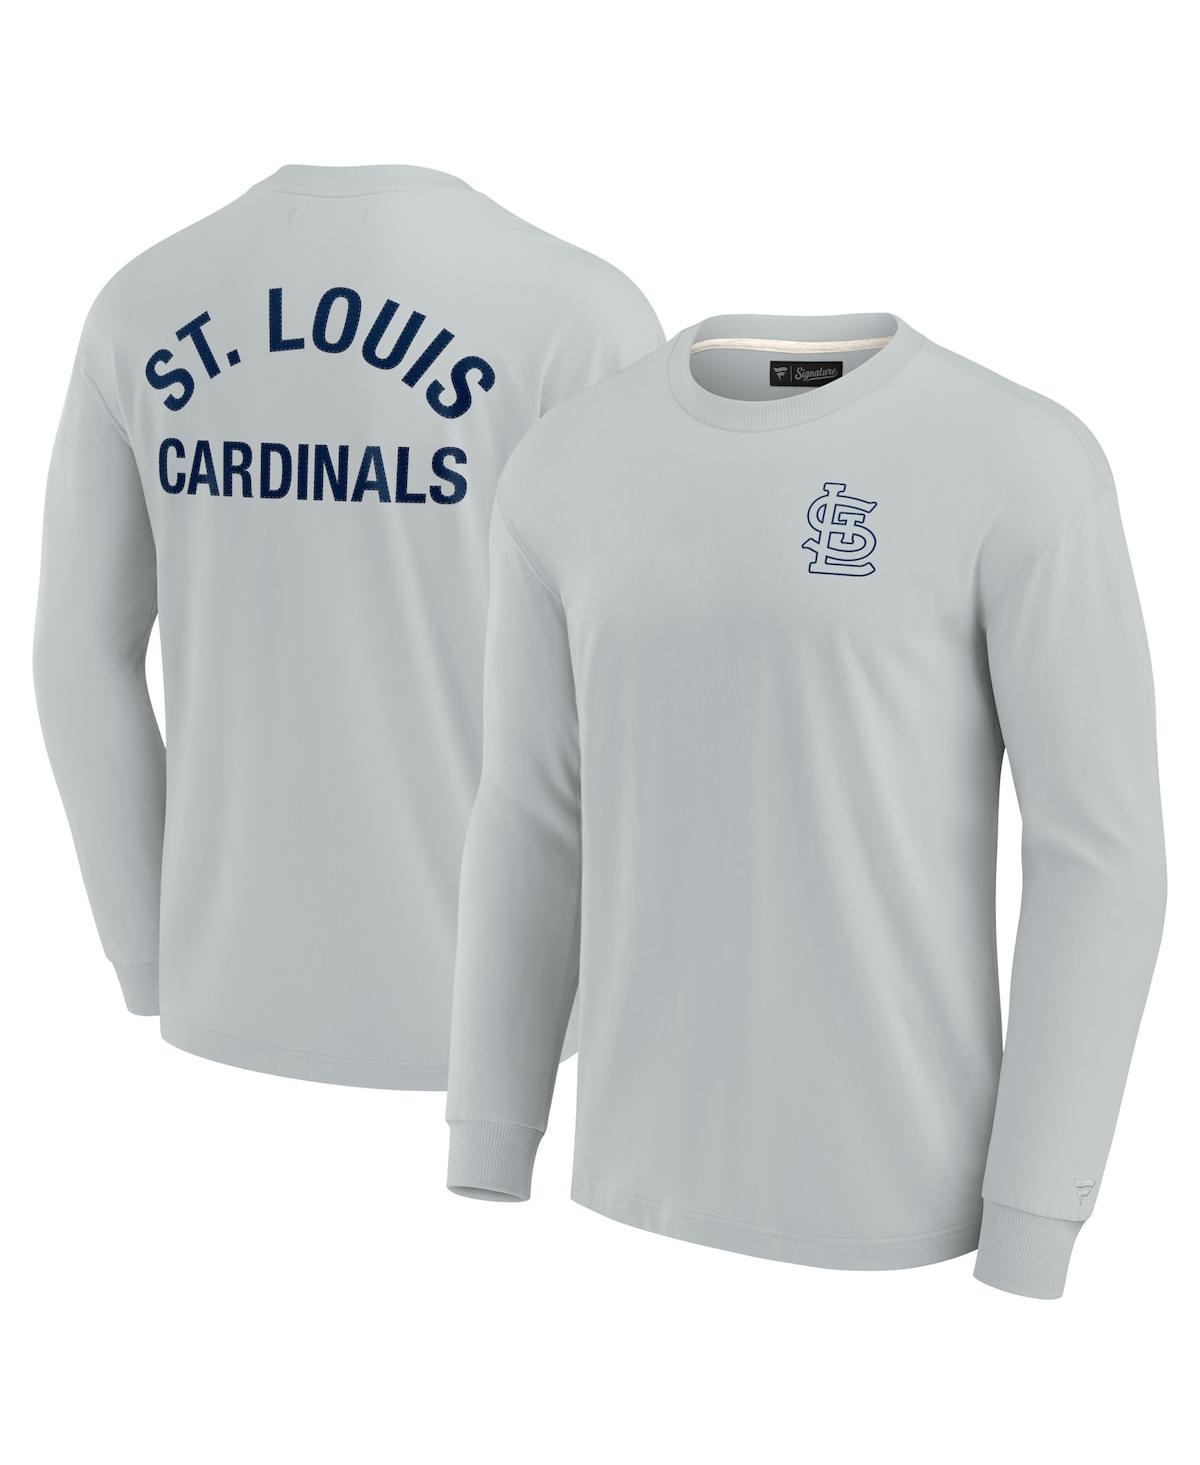 Unisex Fanatics Signature Gray St. Louis Cardinals Super Soft Long Sleeve T-Shirt Size: Extra Small